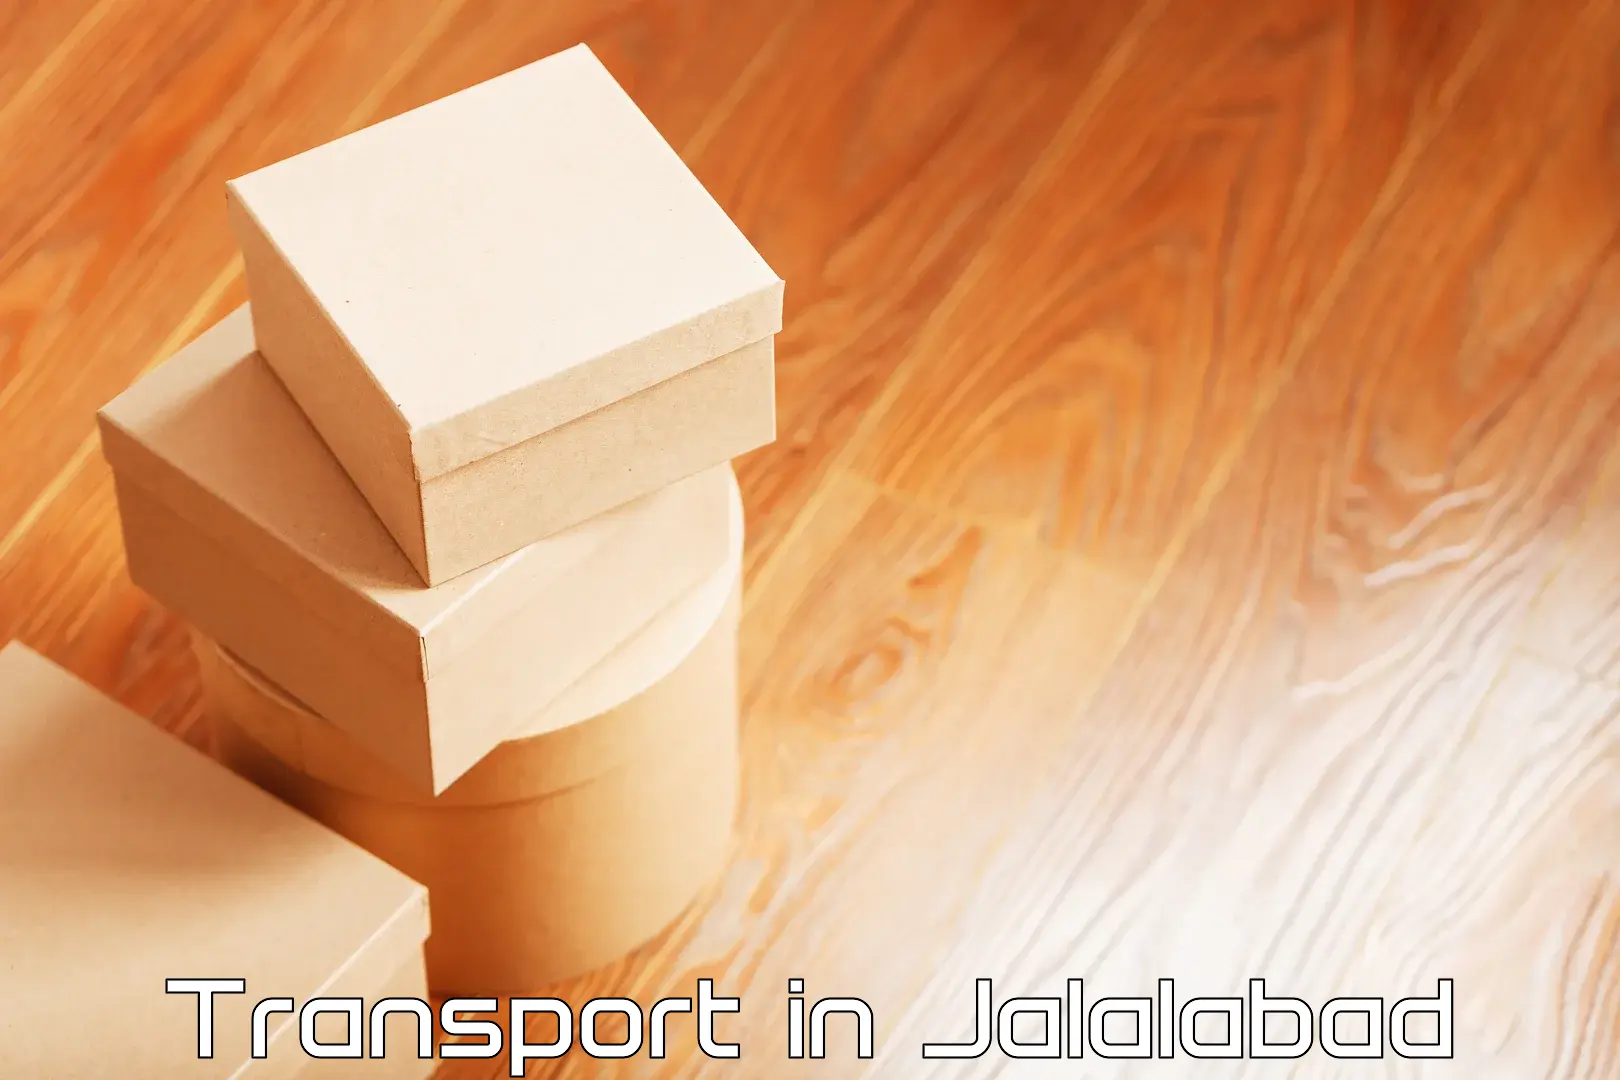 Cargo transportation services in Jalalabad